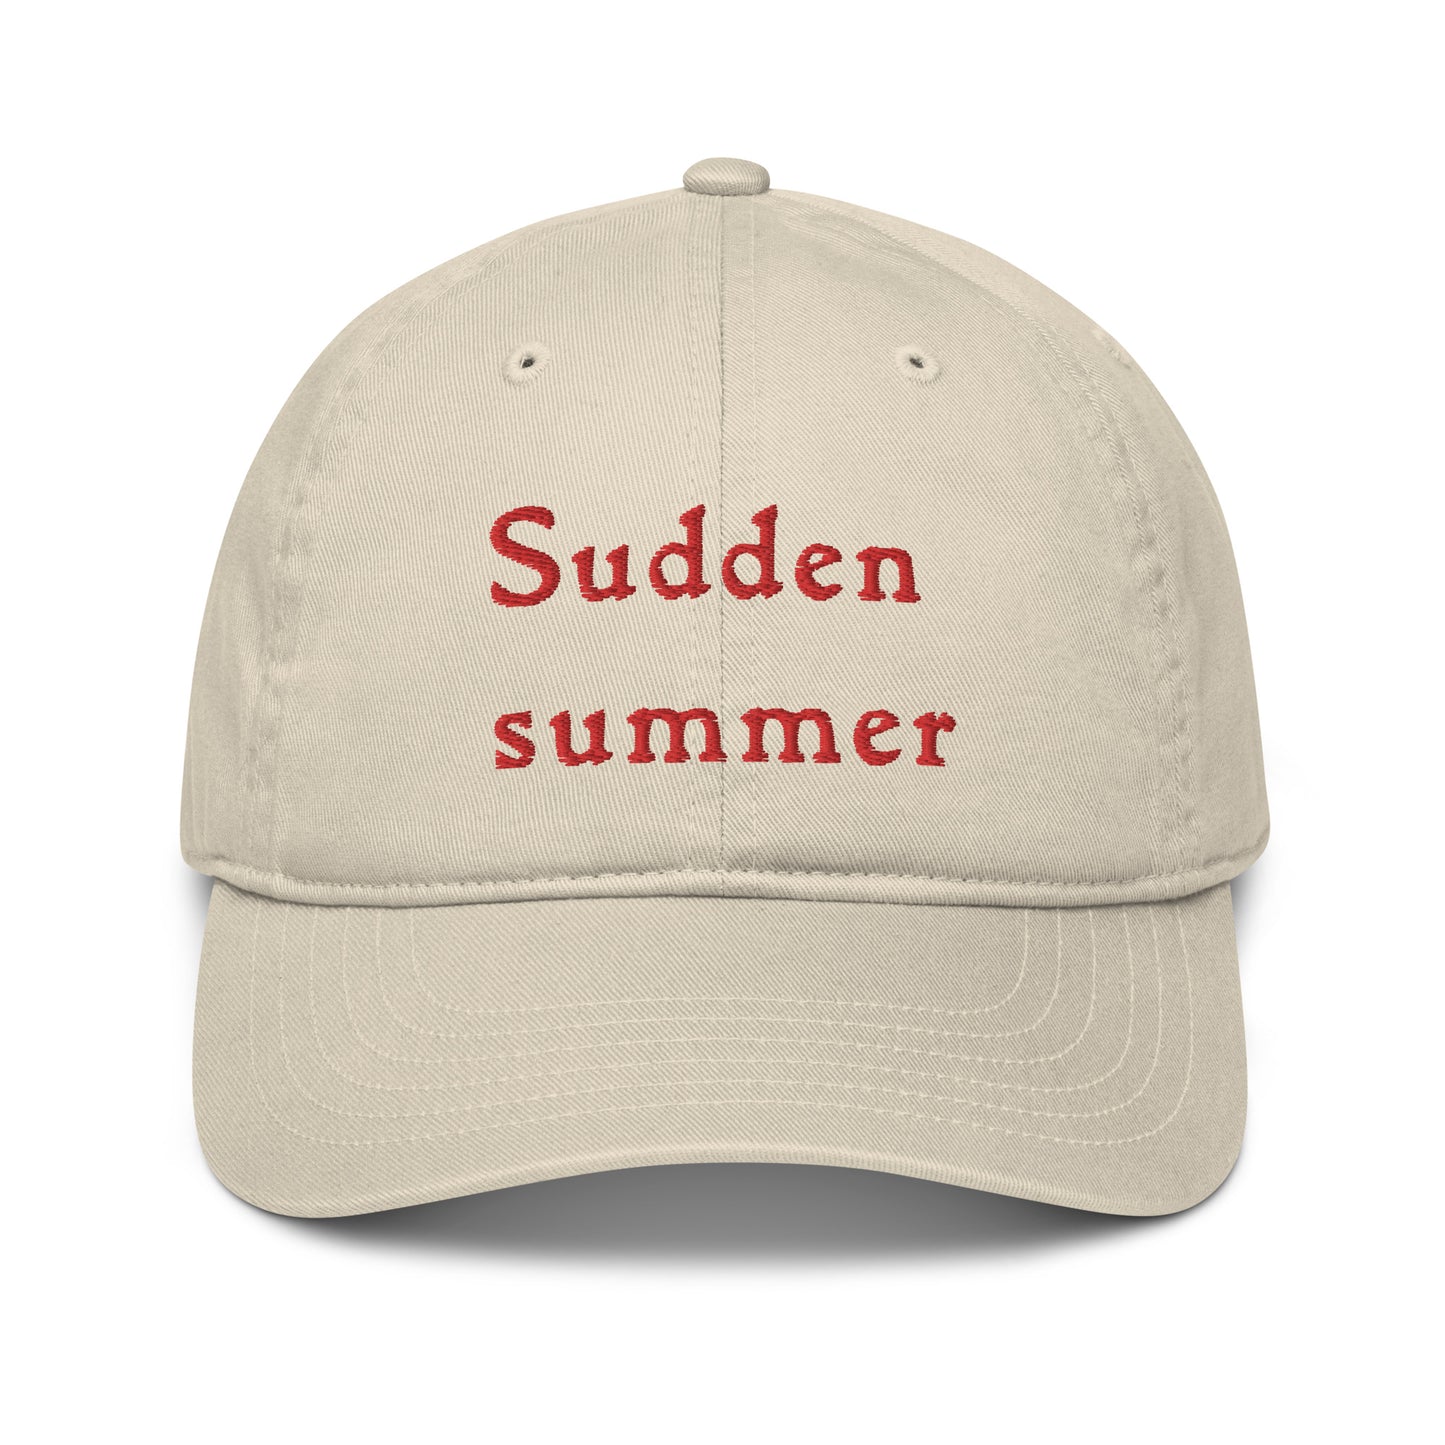 Sudden summer - organic dad hat